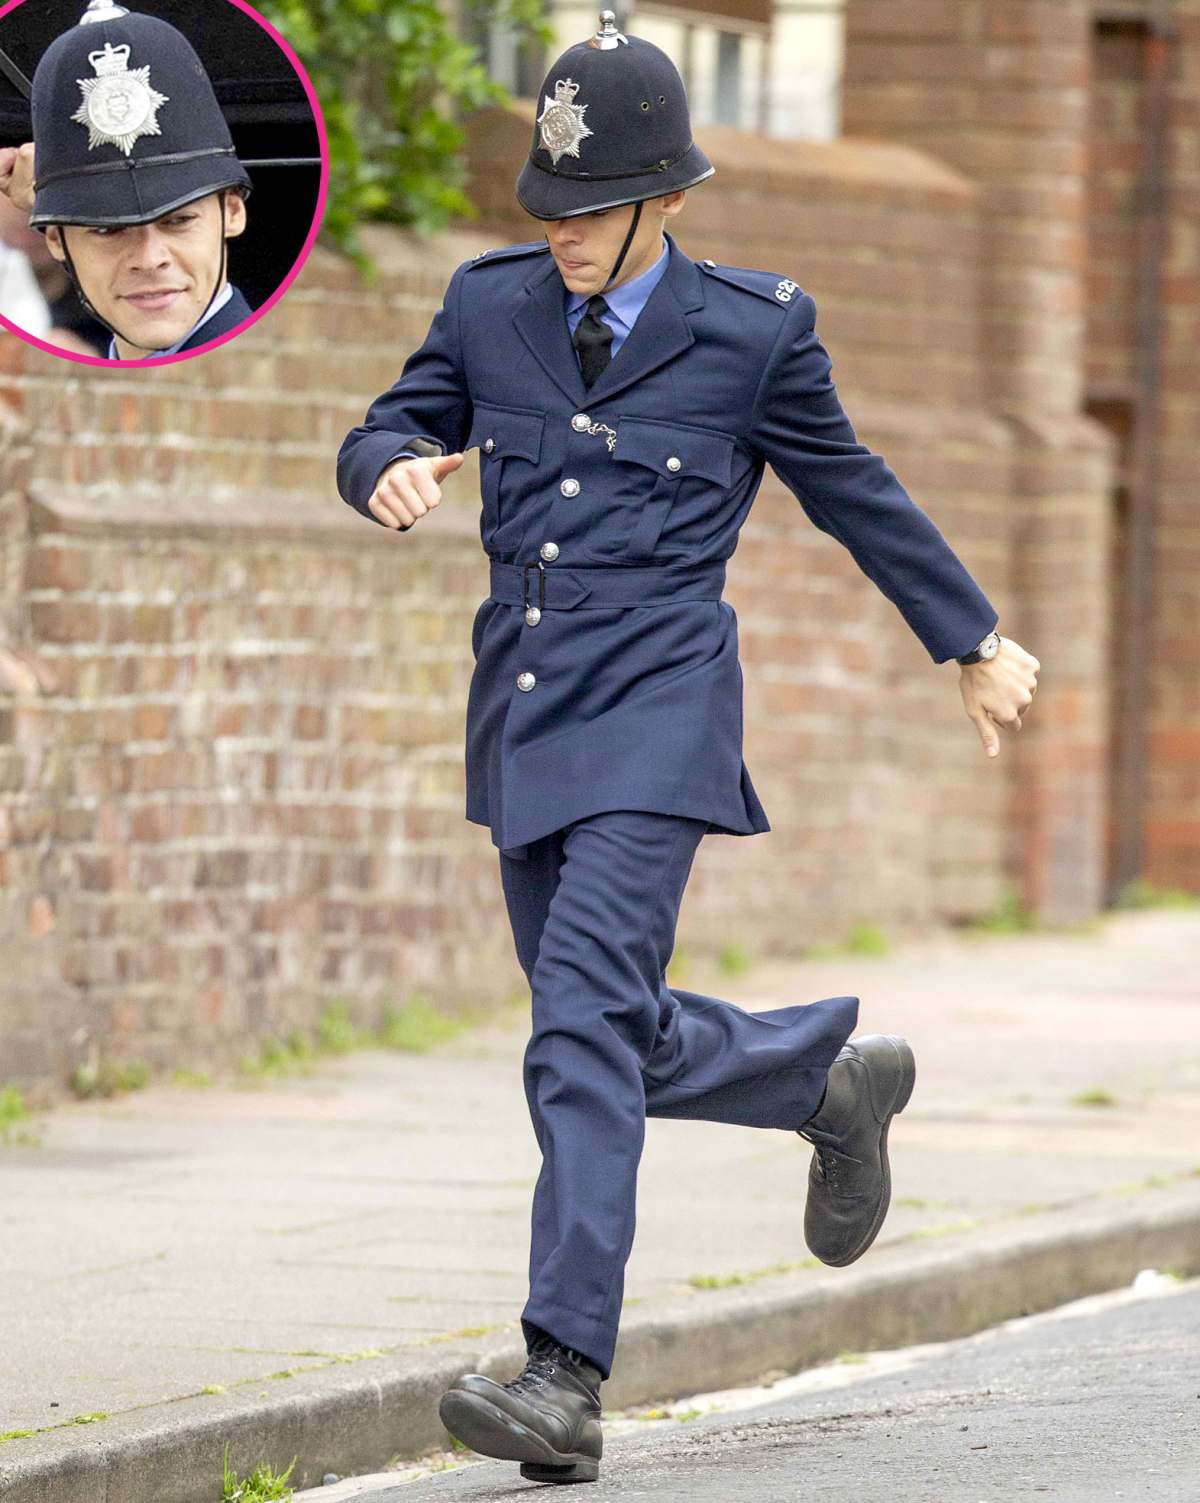 Movie Merchandise : My Policeman Harry Styles Jacket